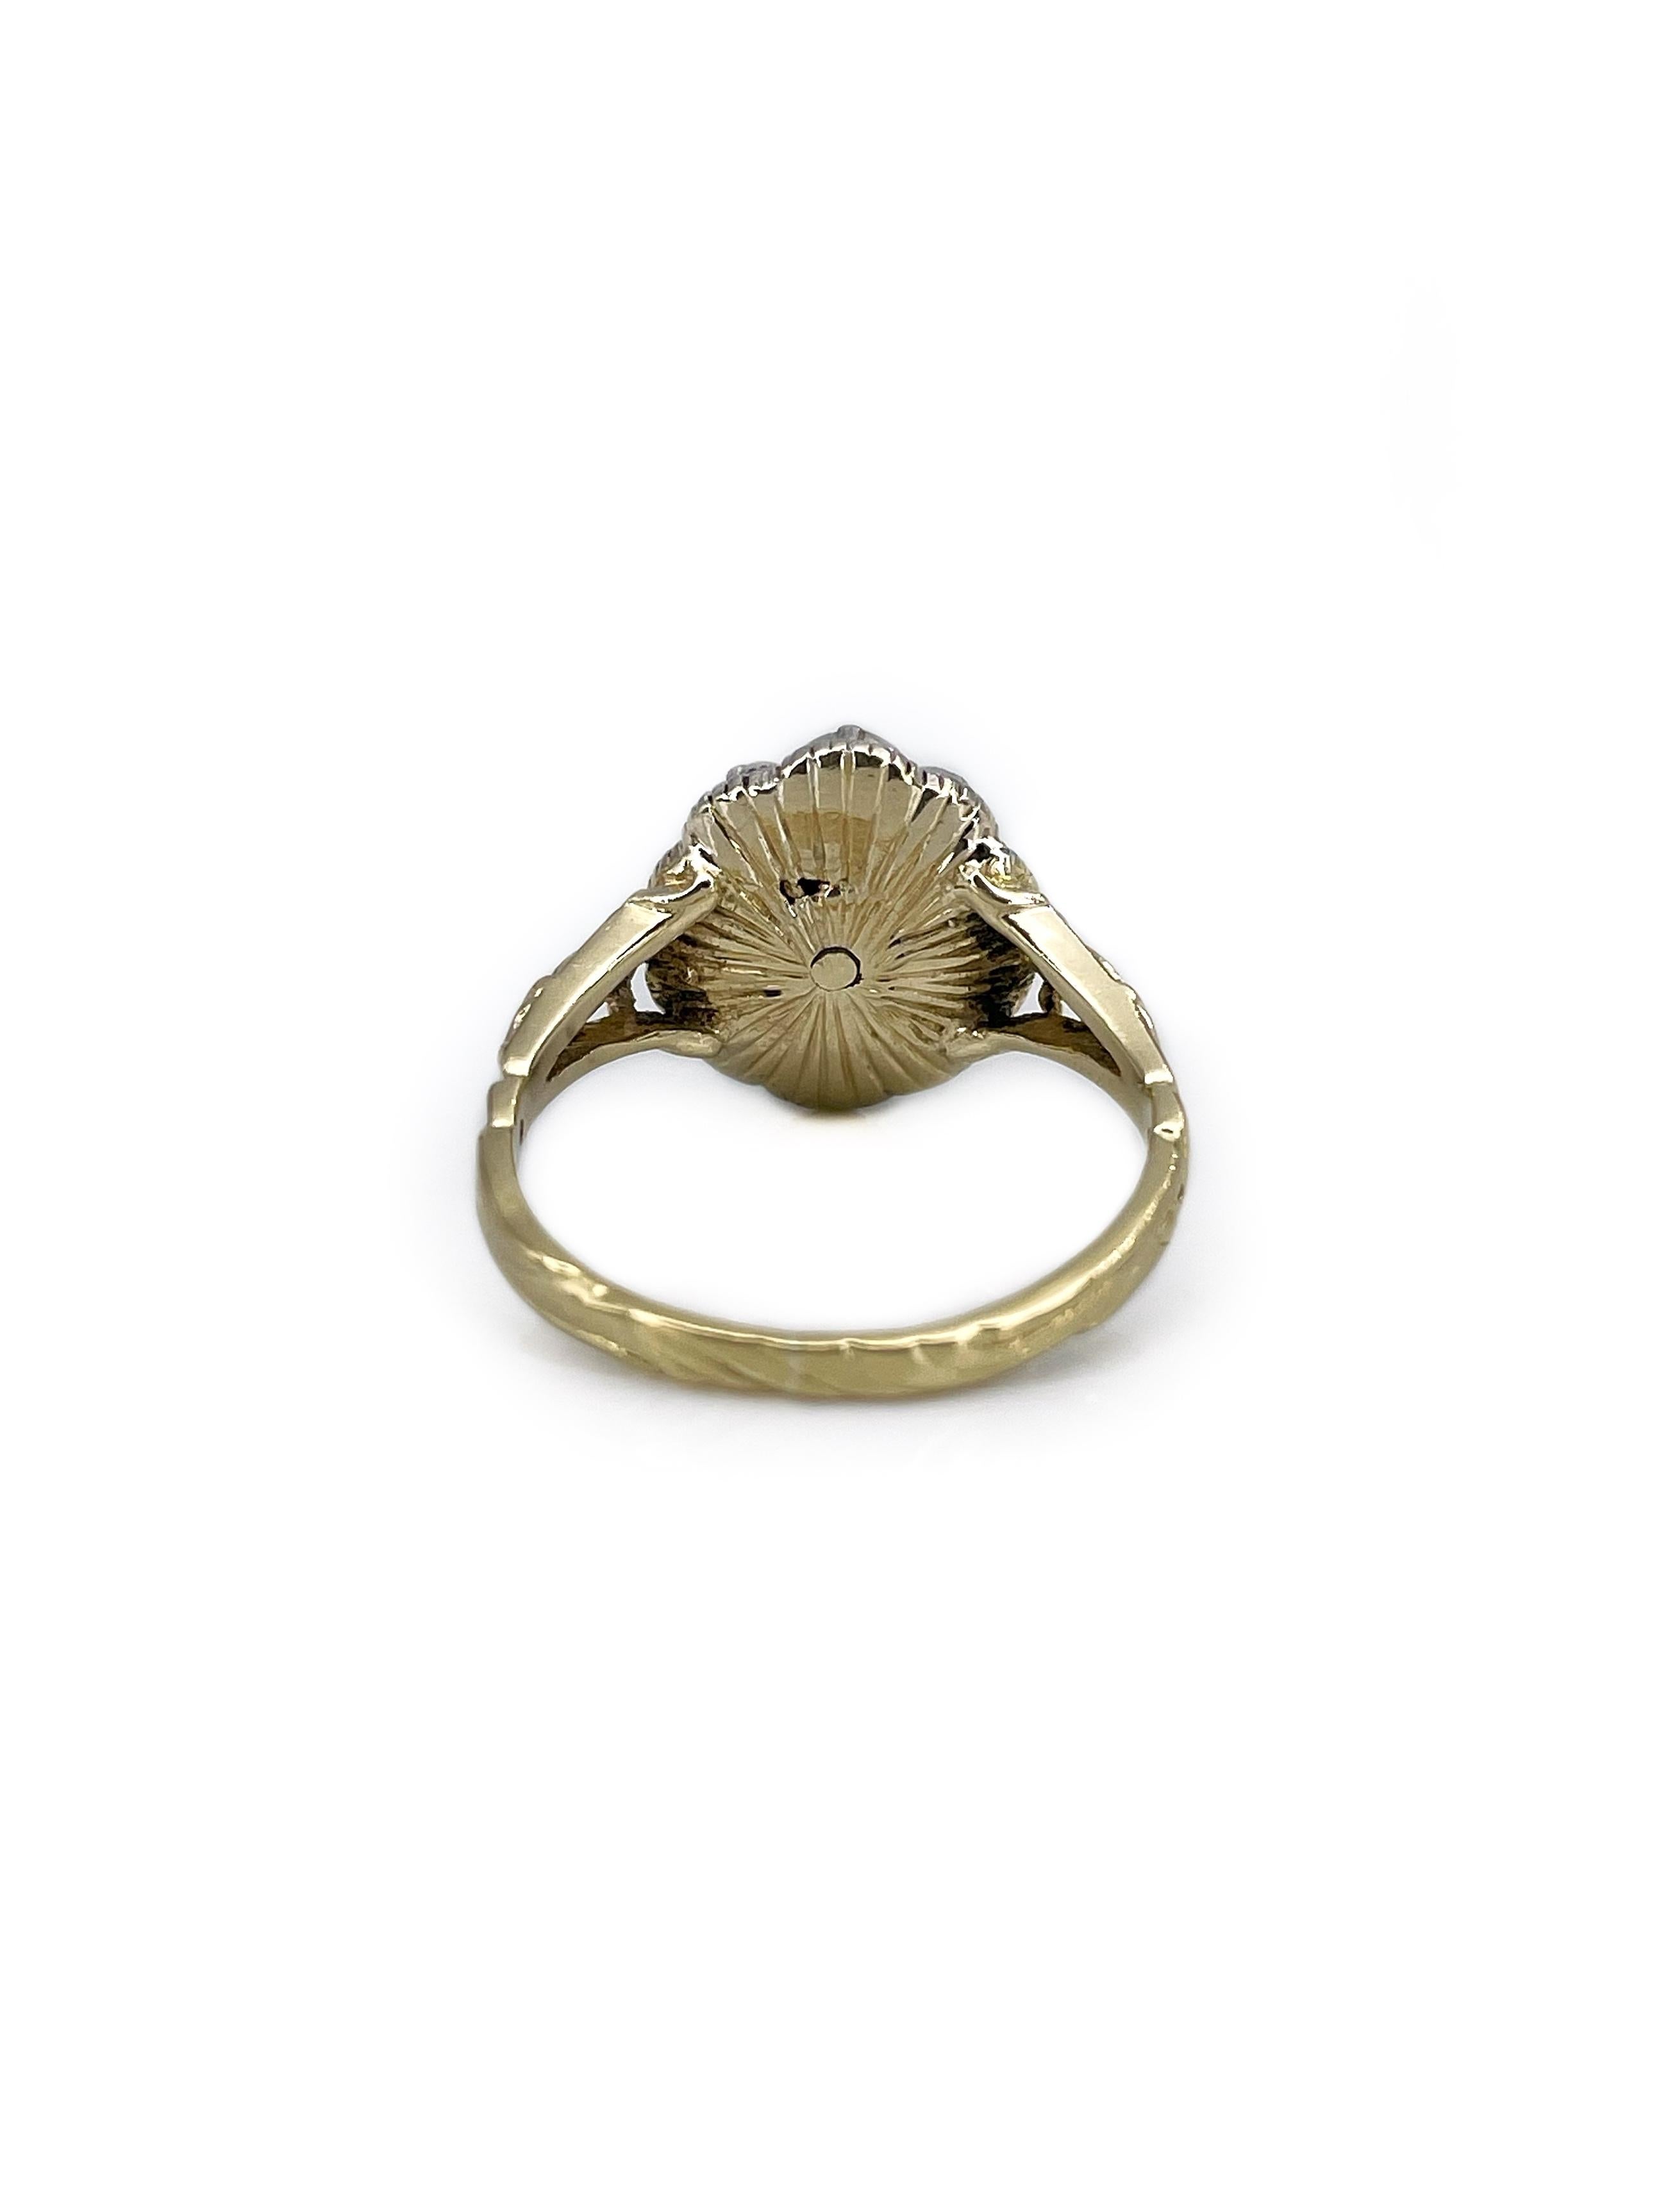 Antique Victorian 18 Karat Gold Rose Cut Diamond Engagement Cluster Ring 1